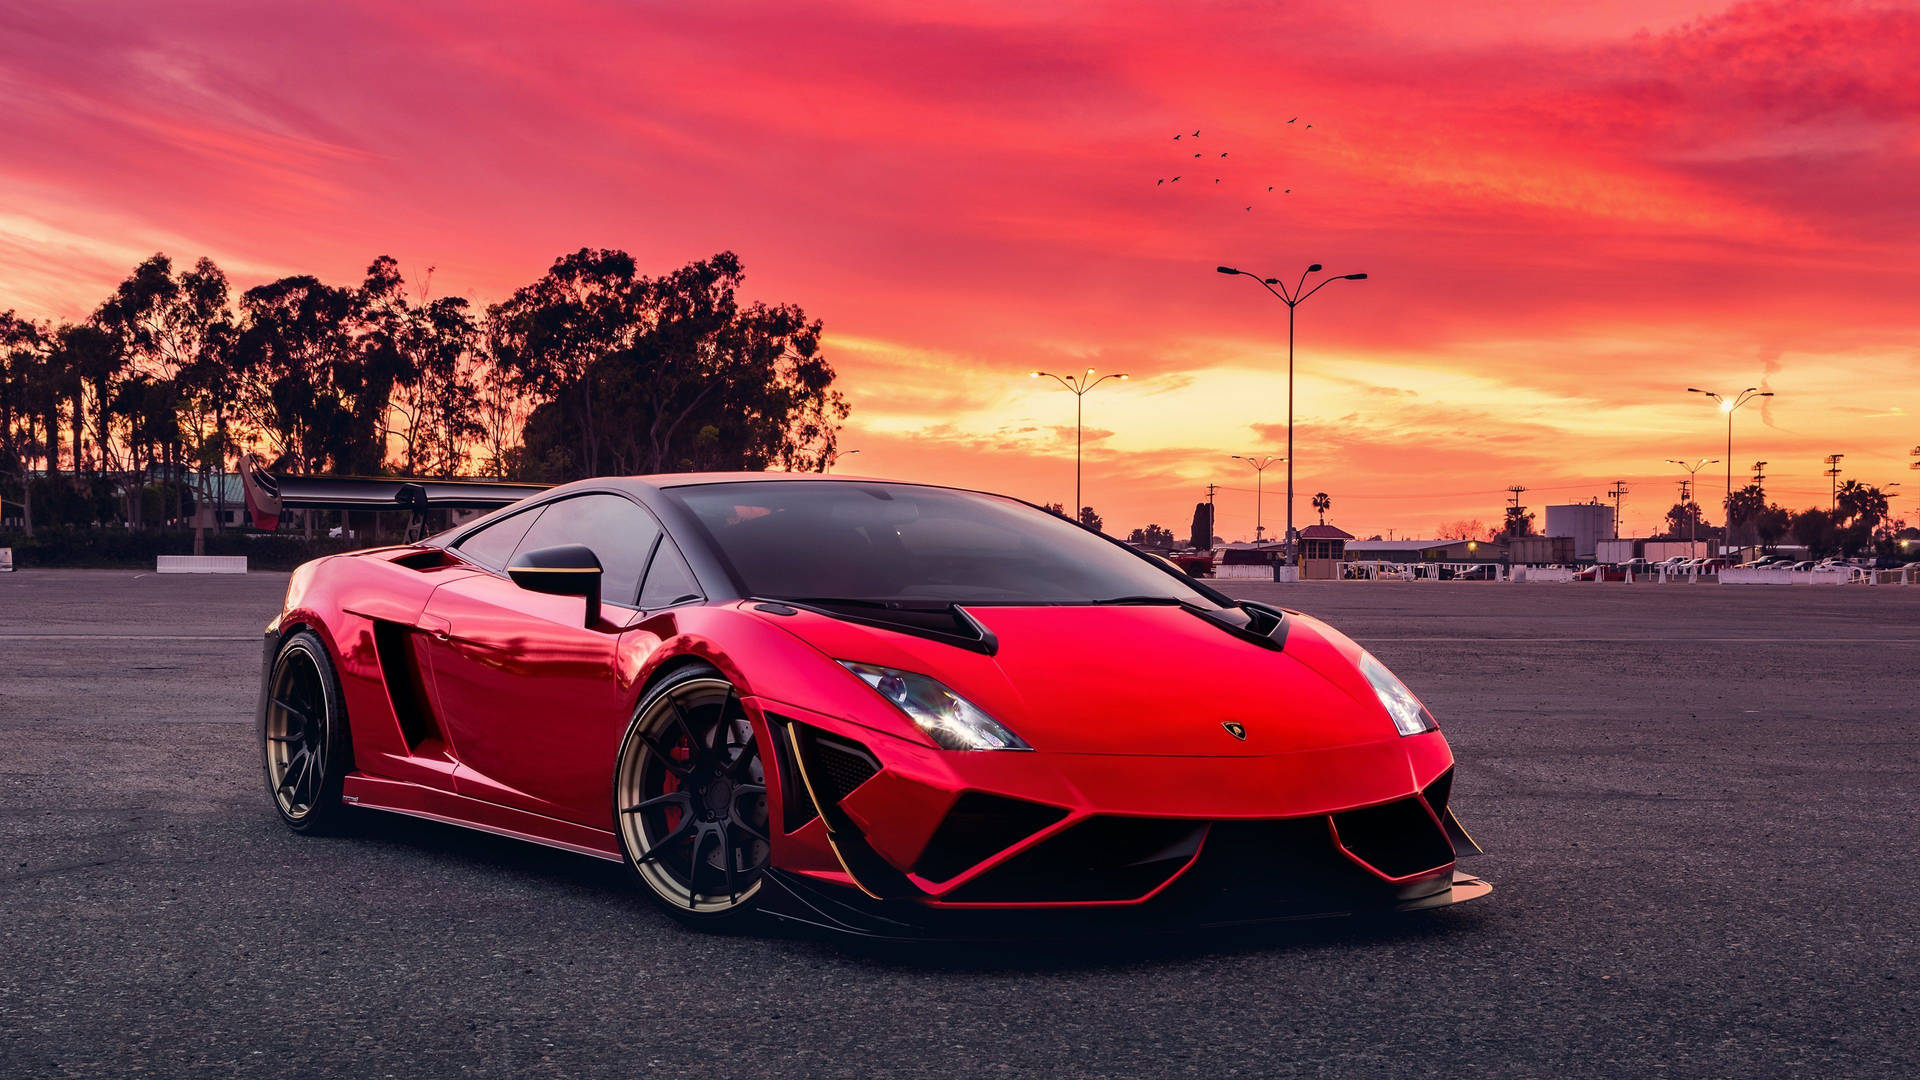 Cool Cars: Sunset Red Modern Lamborghini Wallpaper